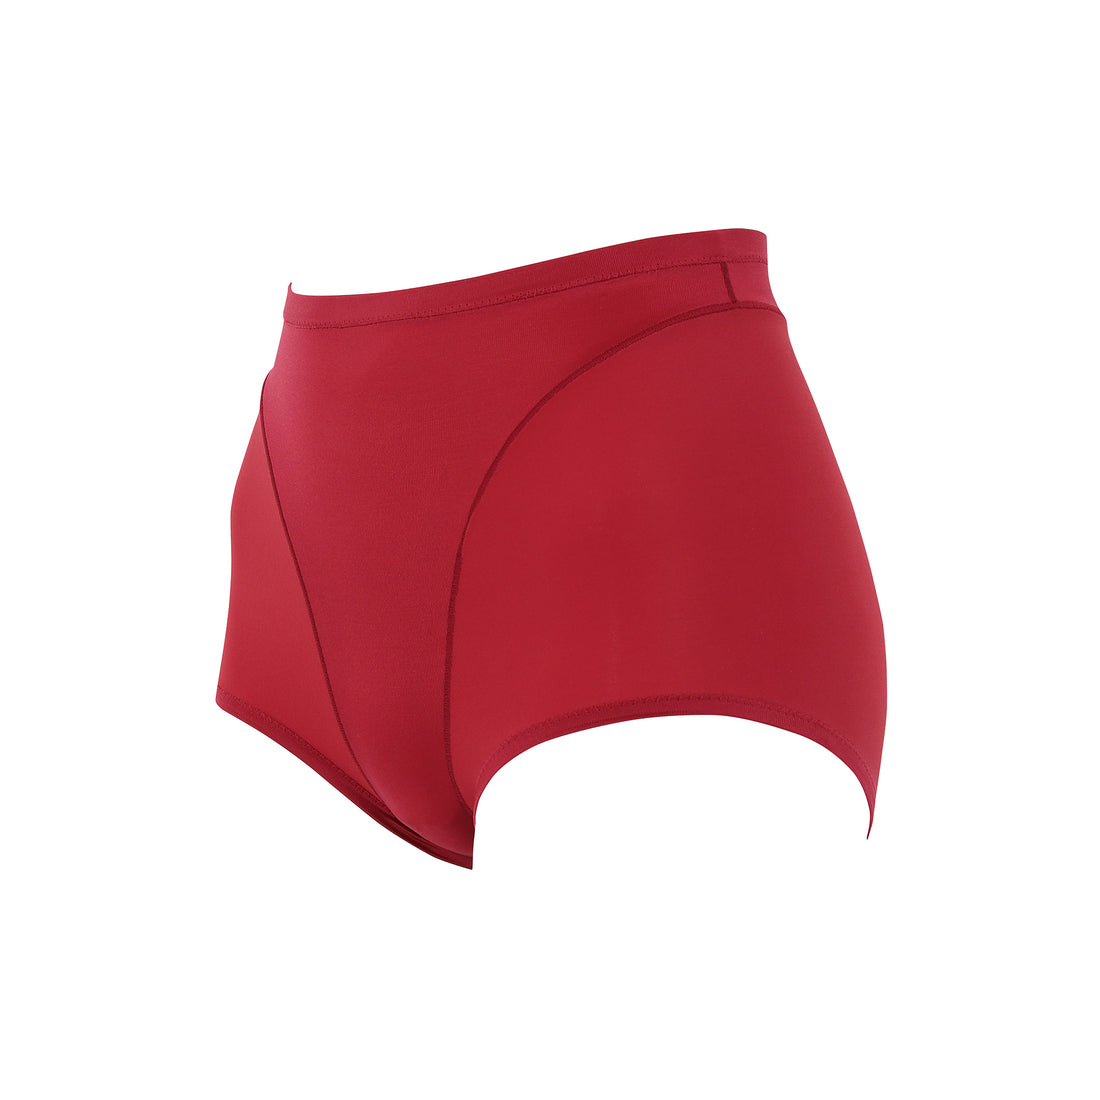 Wacoal Shapewear Hips Tummy Shaping Pants, Model WY1128, Cherry Red (CH)